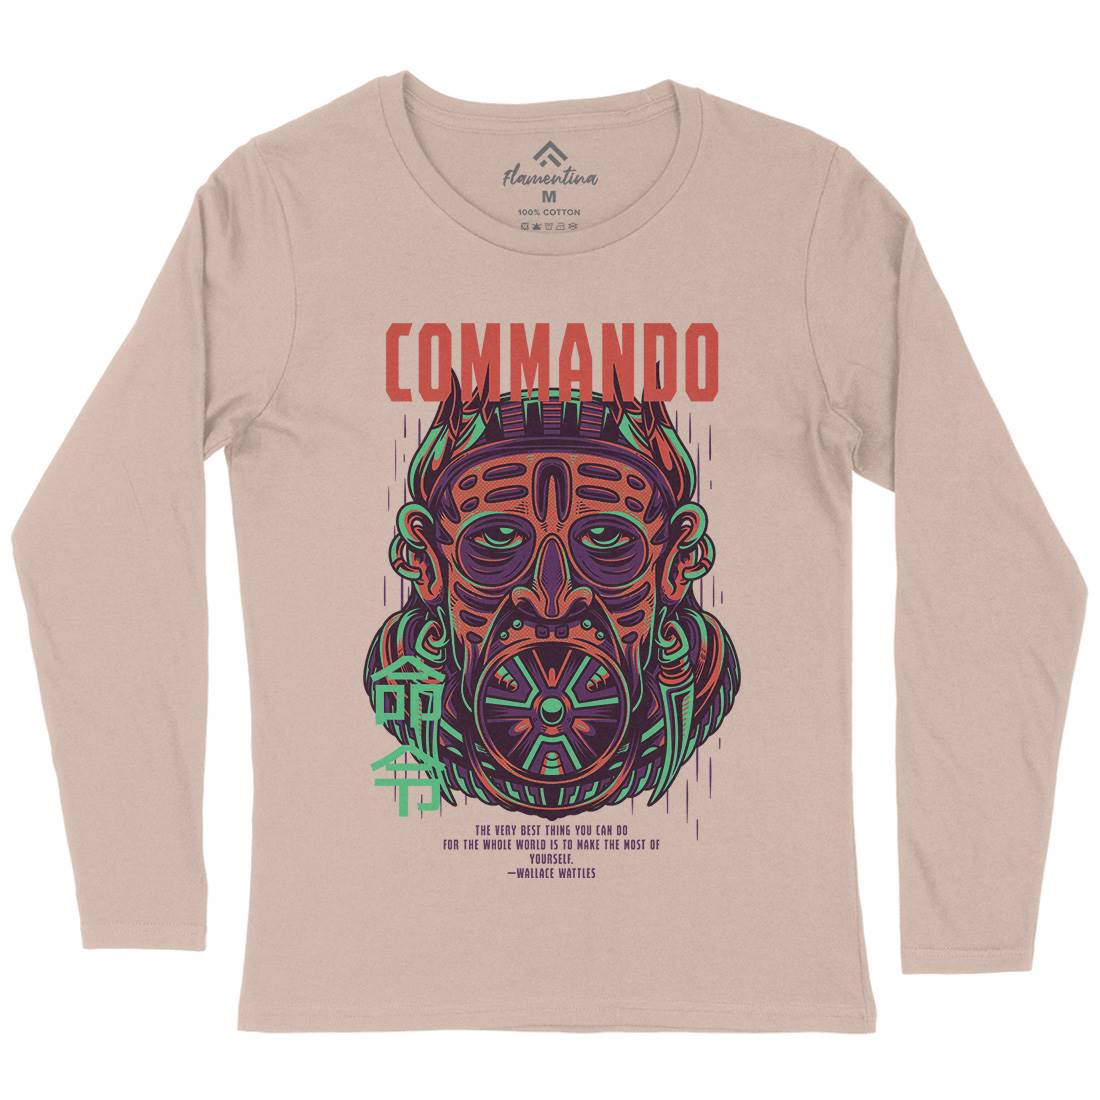 Commando Womens Long Sleeve T-Shirt Army D731